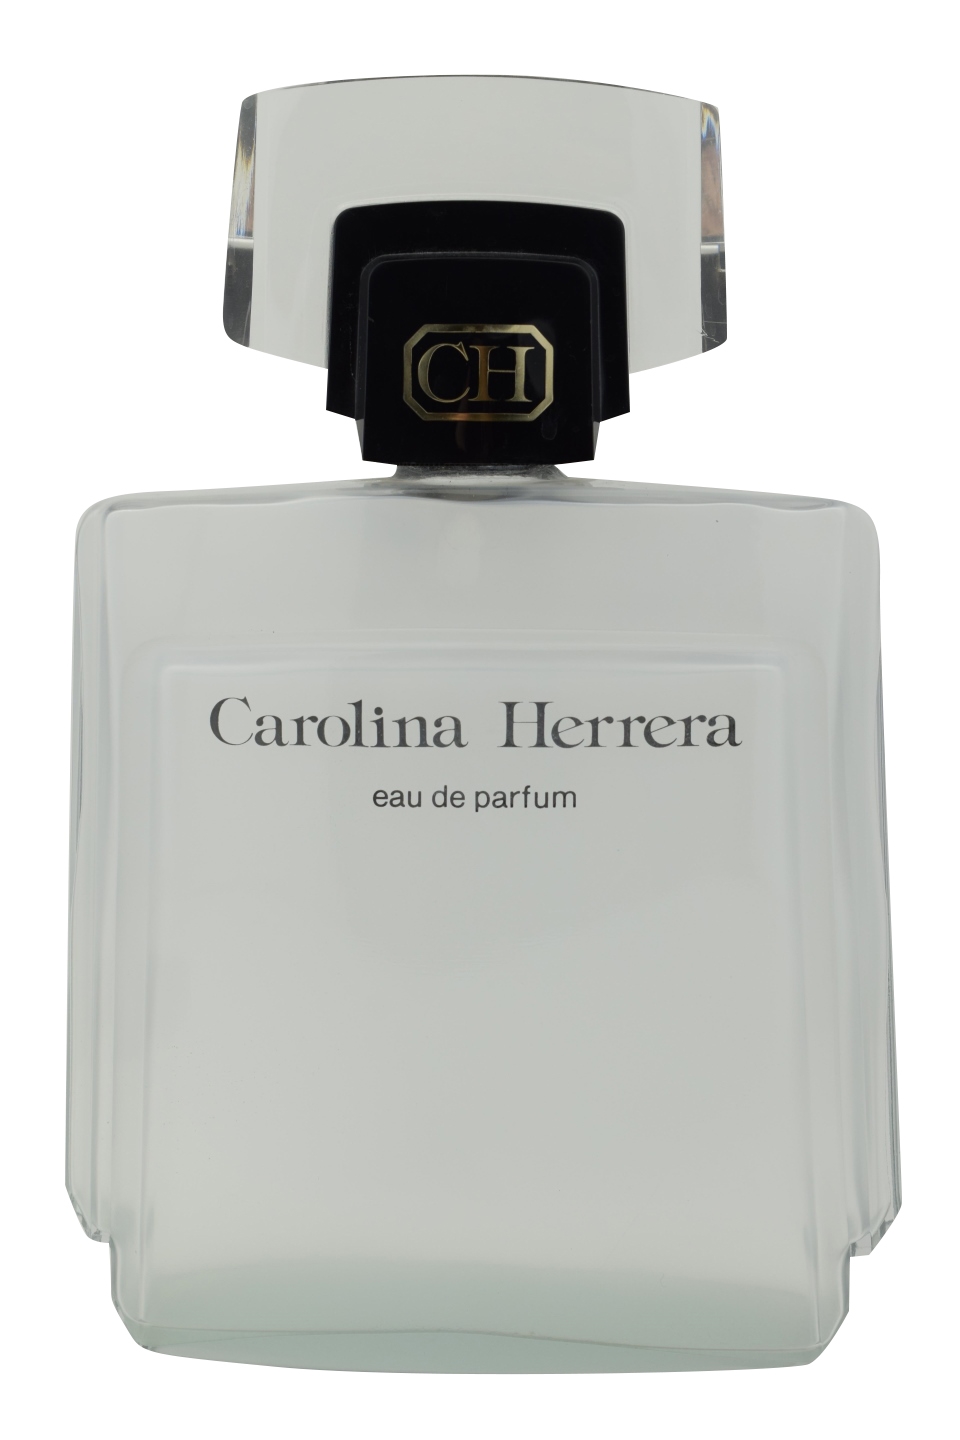 Carolina Herrera | CAROLINA HERRERA FACTICE PERFUME BOTTLE | MutualArt